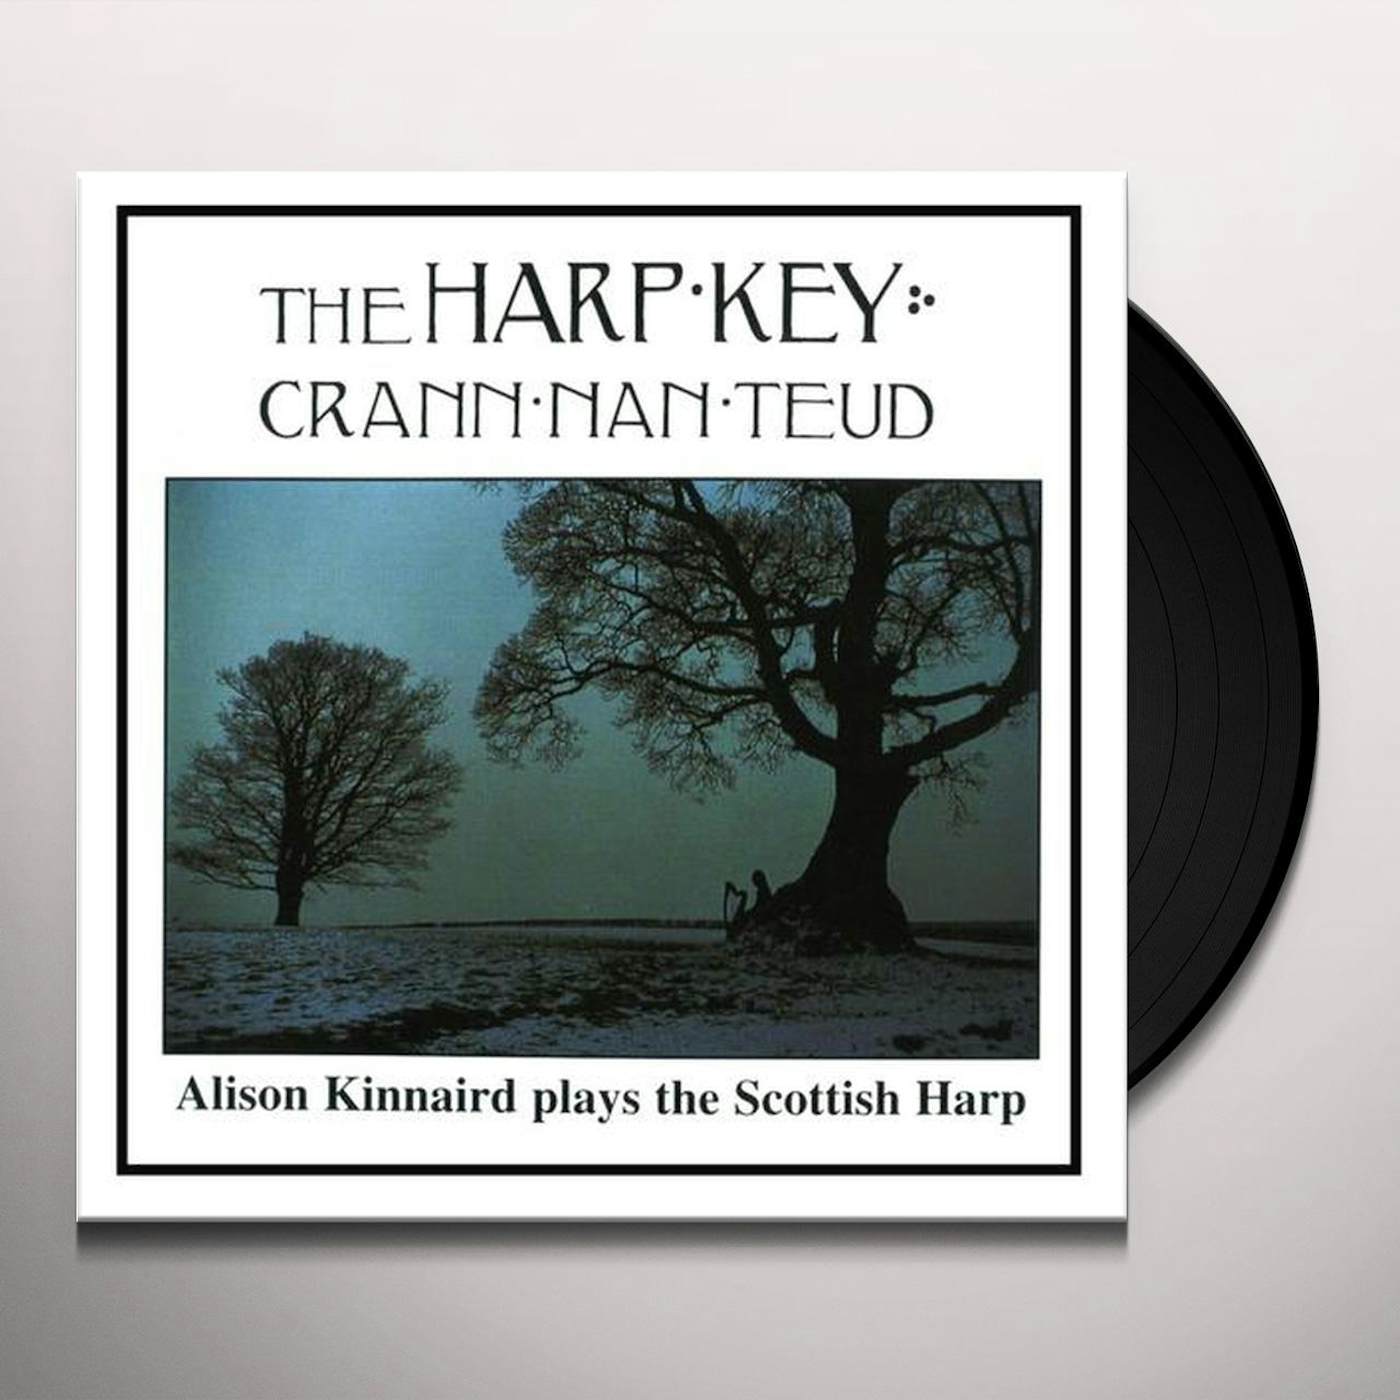 Alison Kinnaird HARP KEY (GRANN NAN TEUD) Vinyl Record